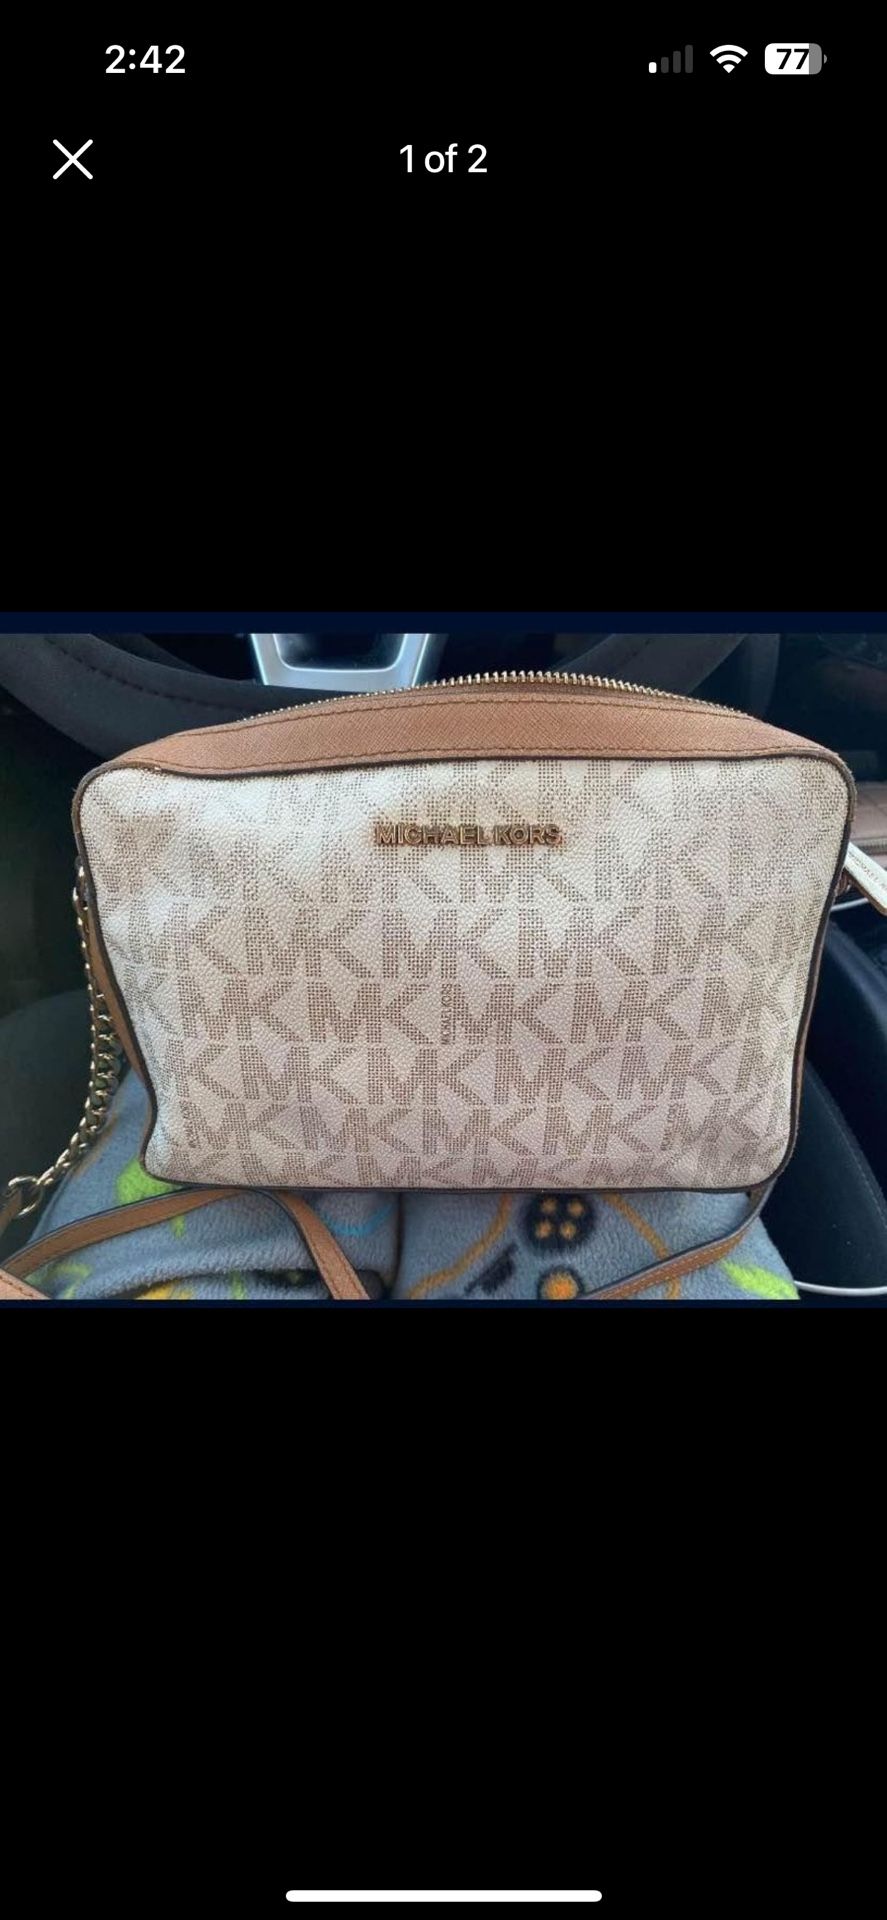 MK purse 